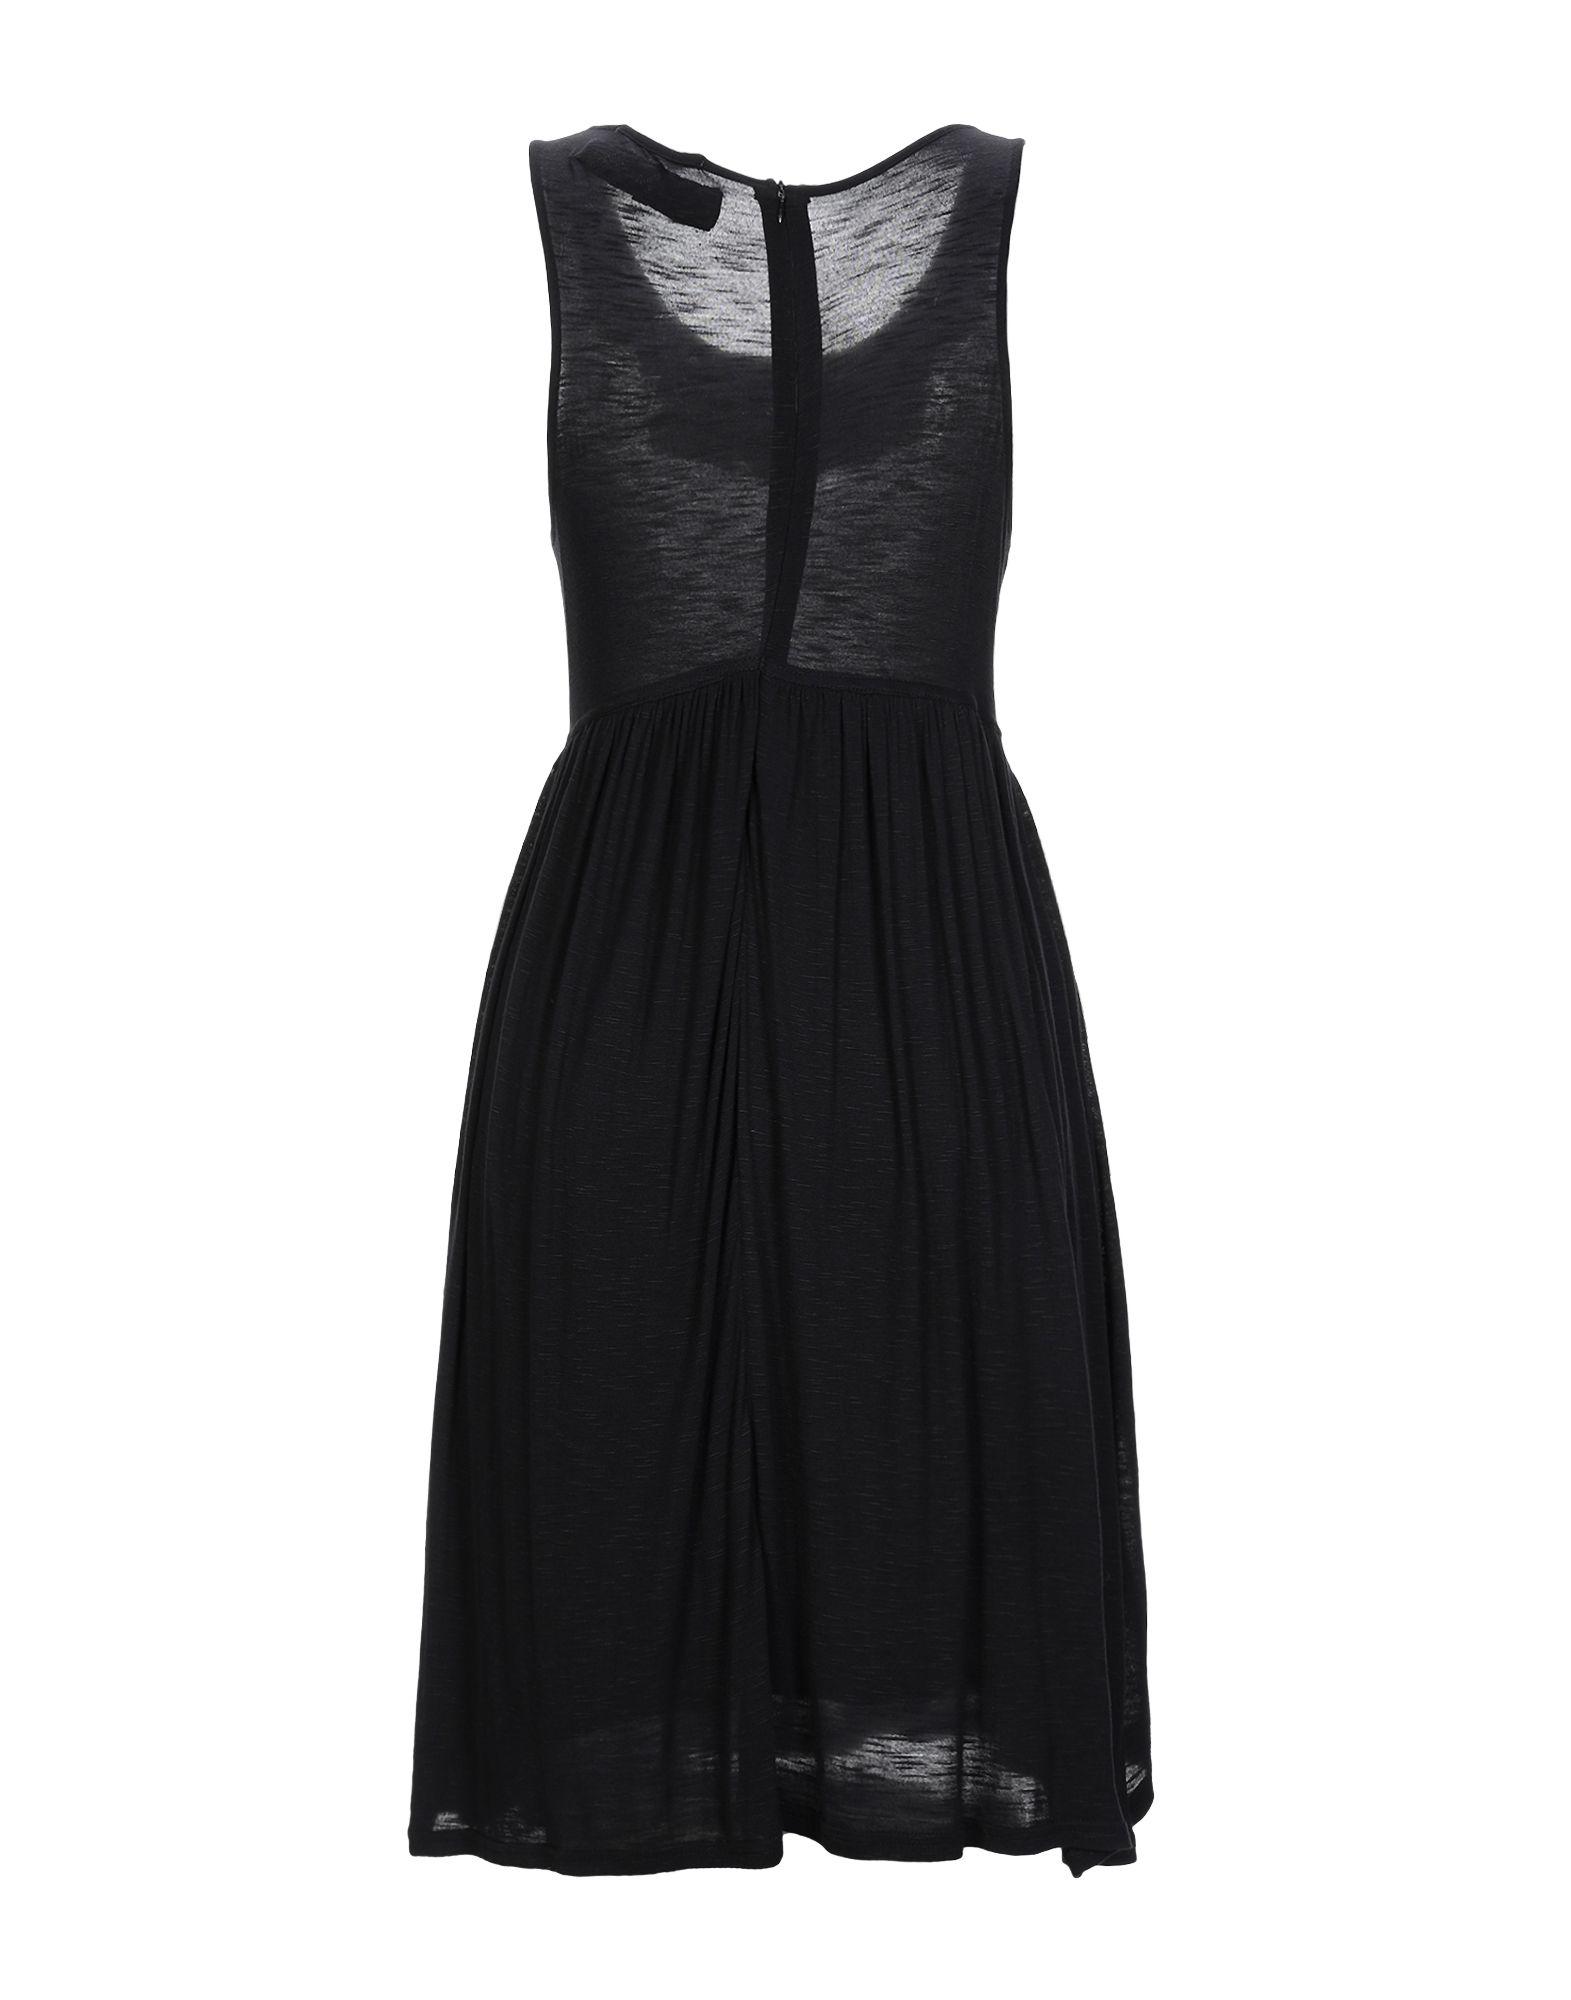 Silvian Heach Synthetic Knee-length Dress in Black - Lyst